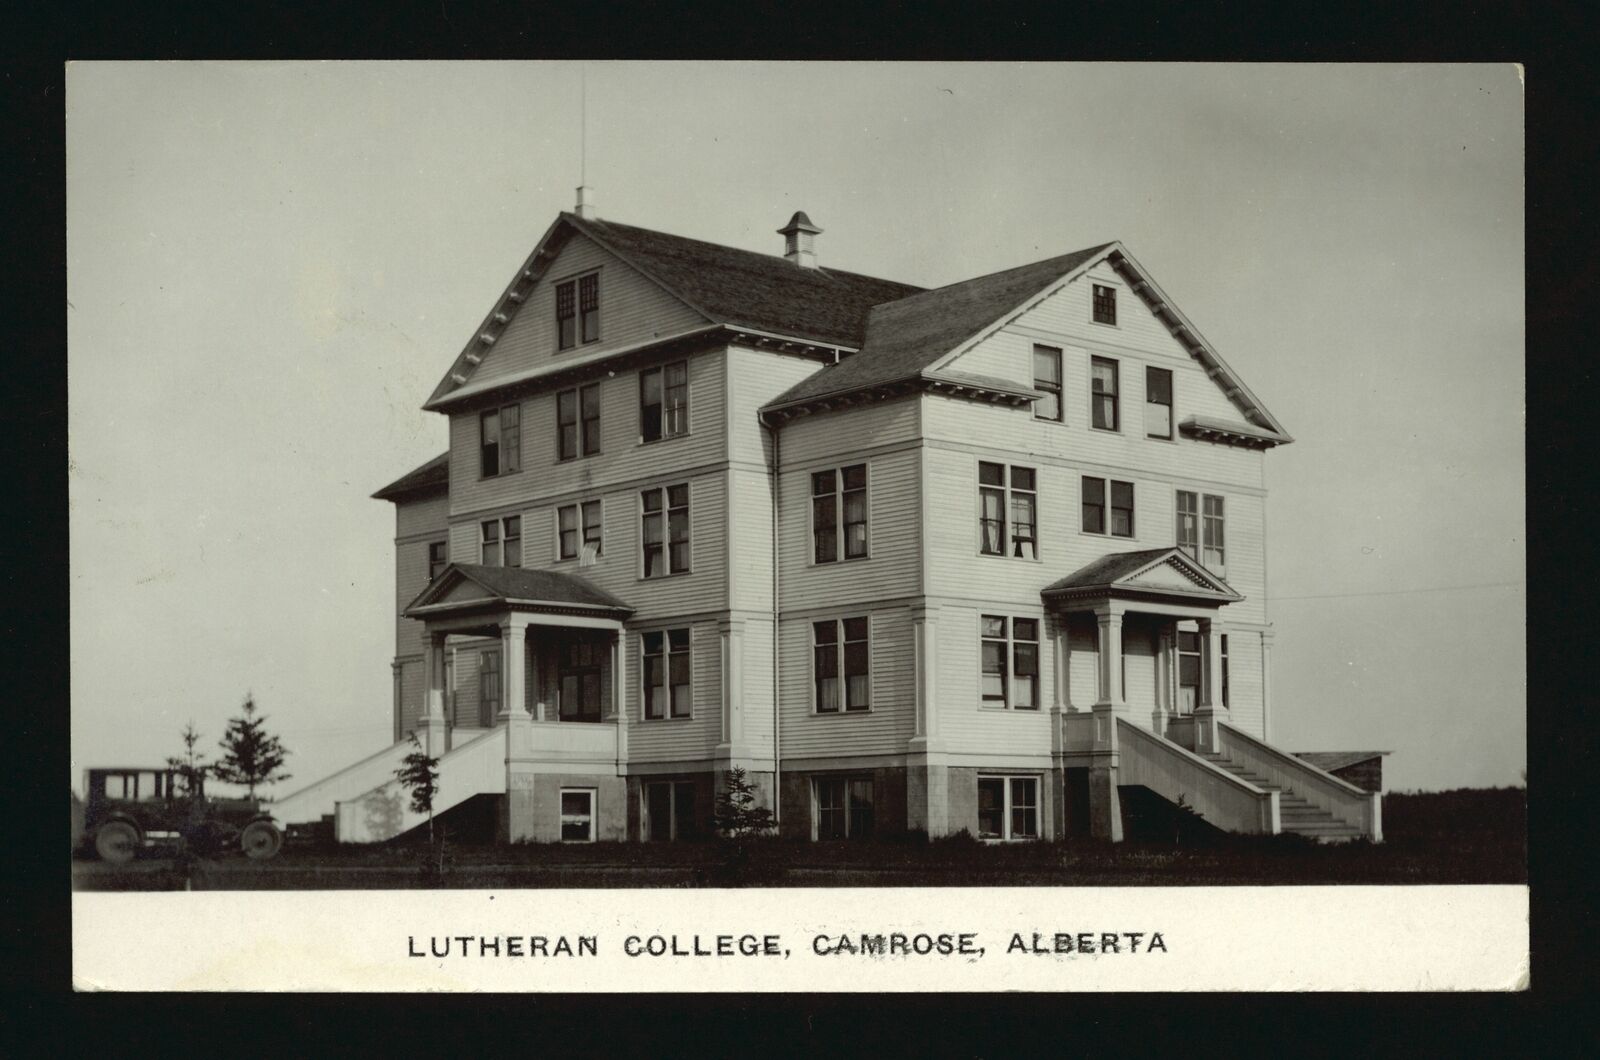 Lutheran college Camrose Alberta - The Camrose Lutheran College (n- Old Photo